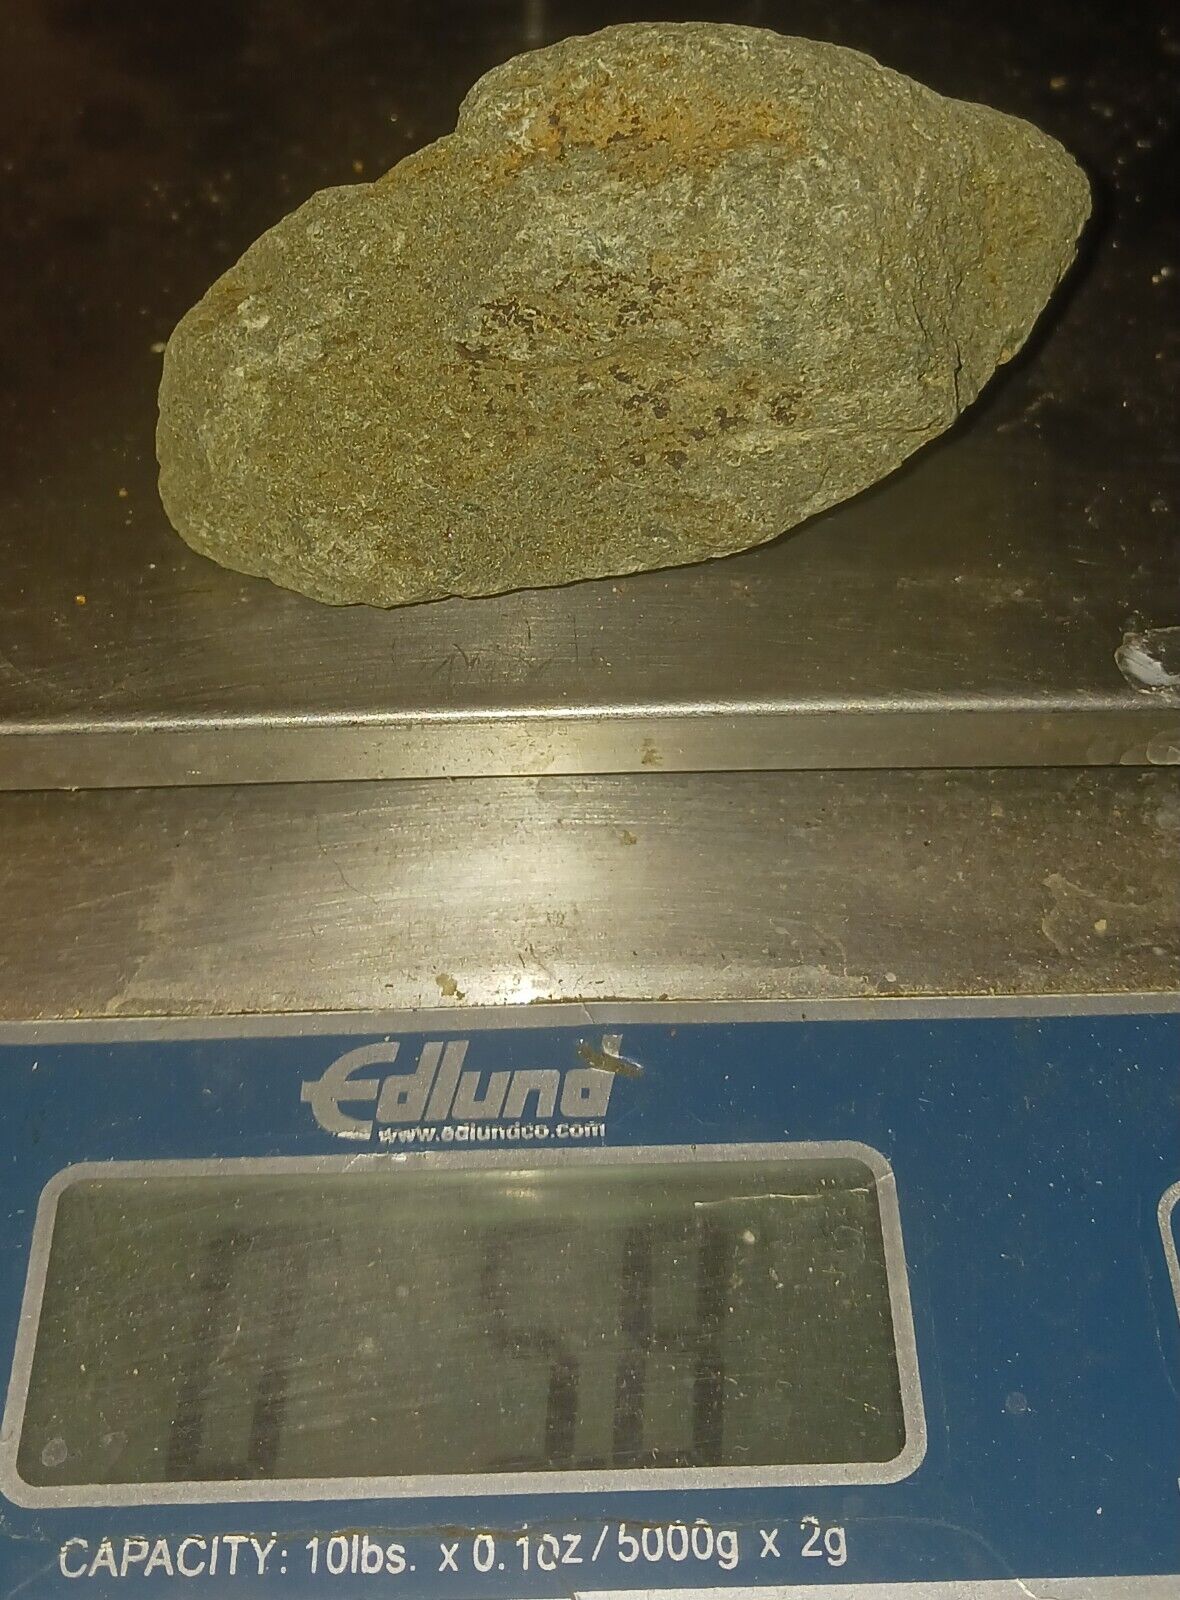 164.43 Grams Ancient Greenstone Gold Ore Tests Estimate 4.72% Flour Gold Inside